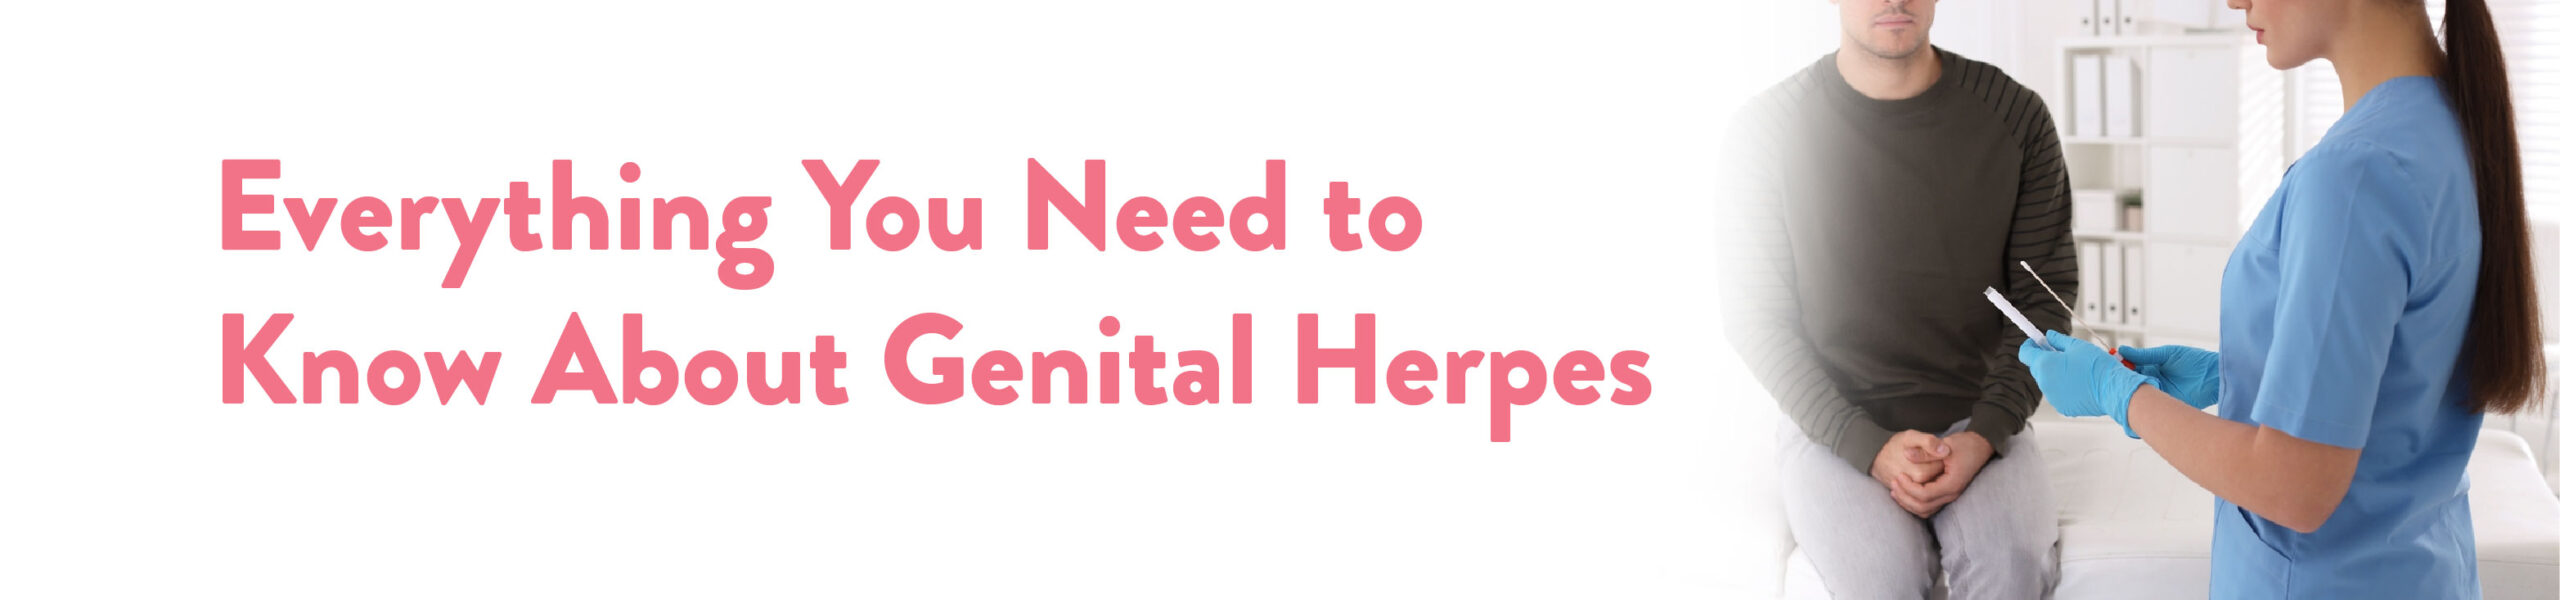 Genital Herpes Medical Information